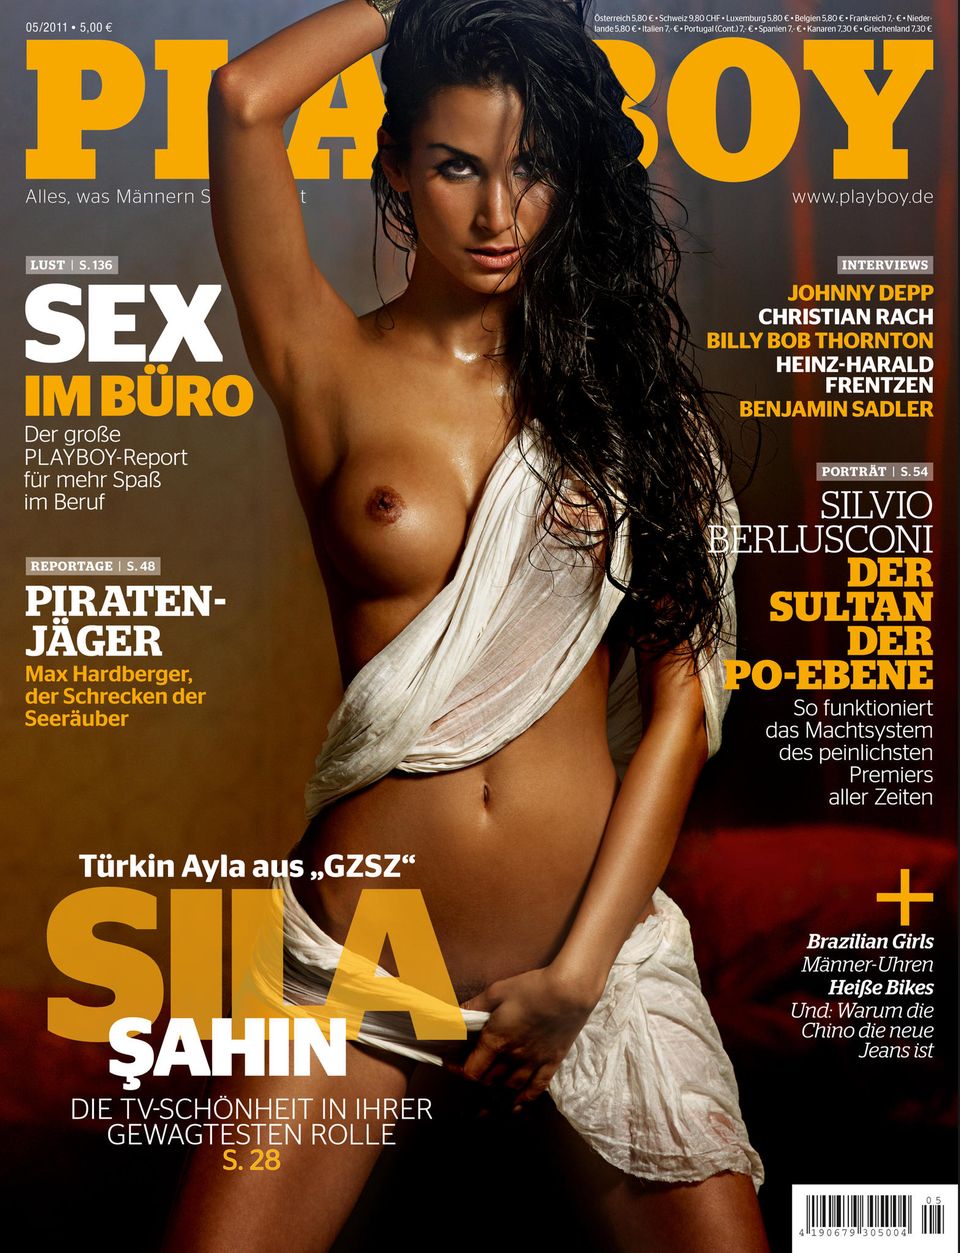 GZSZ-Star Sila Sahin im Playboy